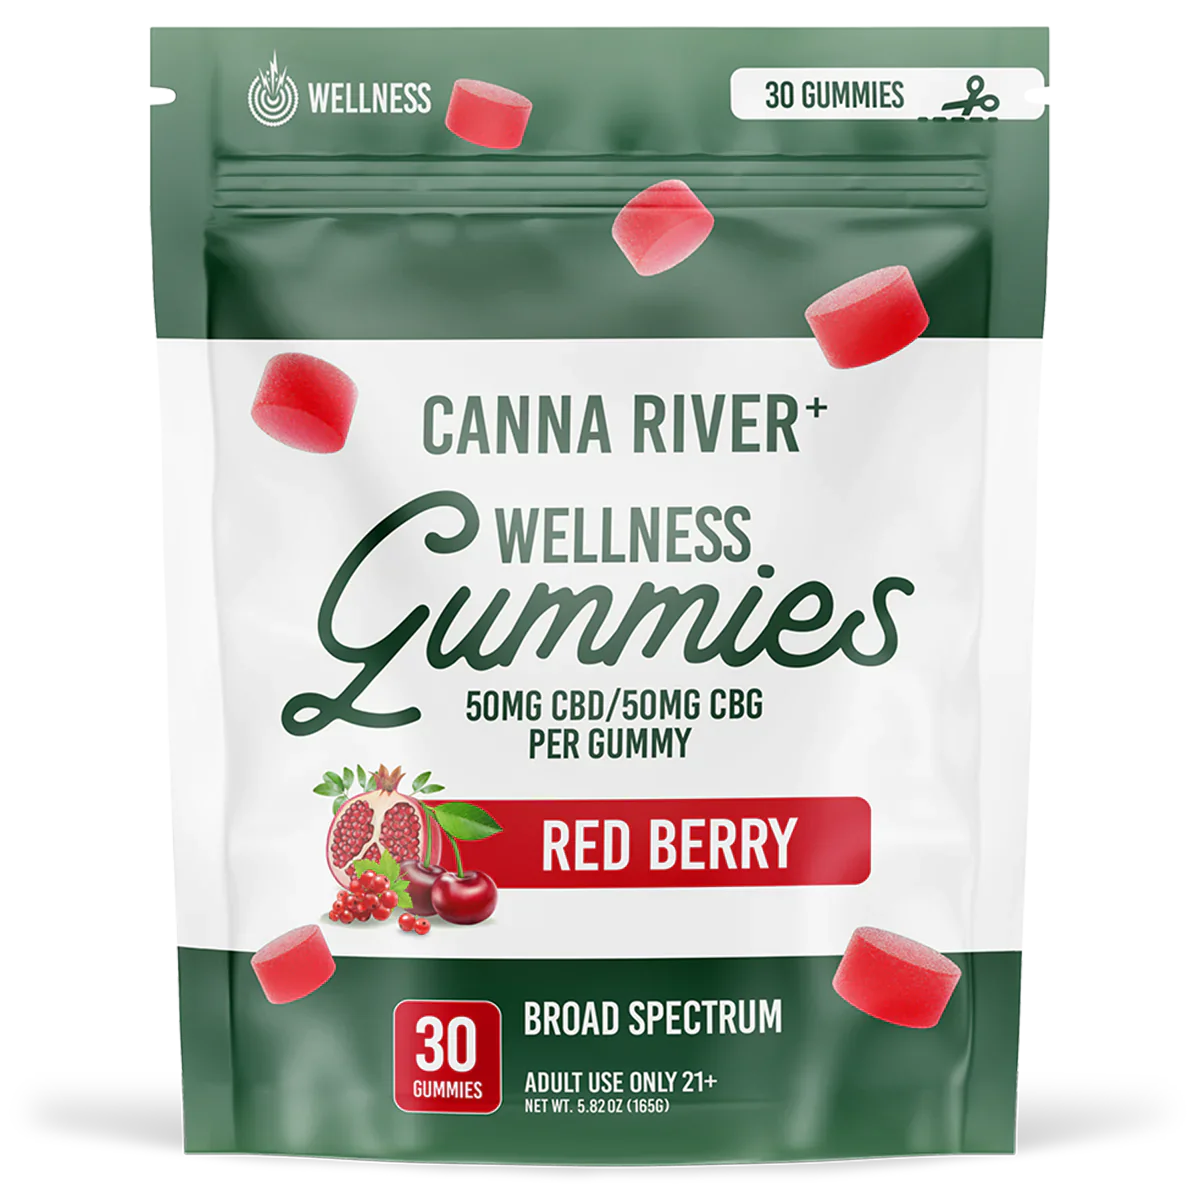 Canna River - Broad Spectrum CBD/CBG Gummies - Wellness - Red Berry - 30 Gummies (100MG Each) - Canna River - Sky High West Chester